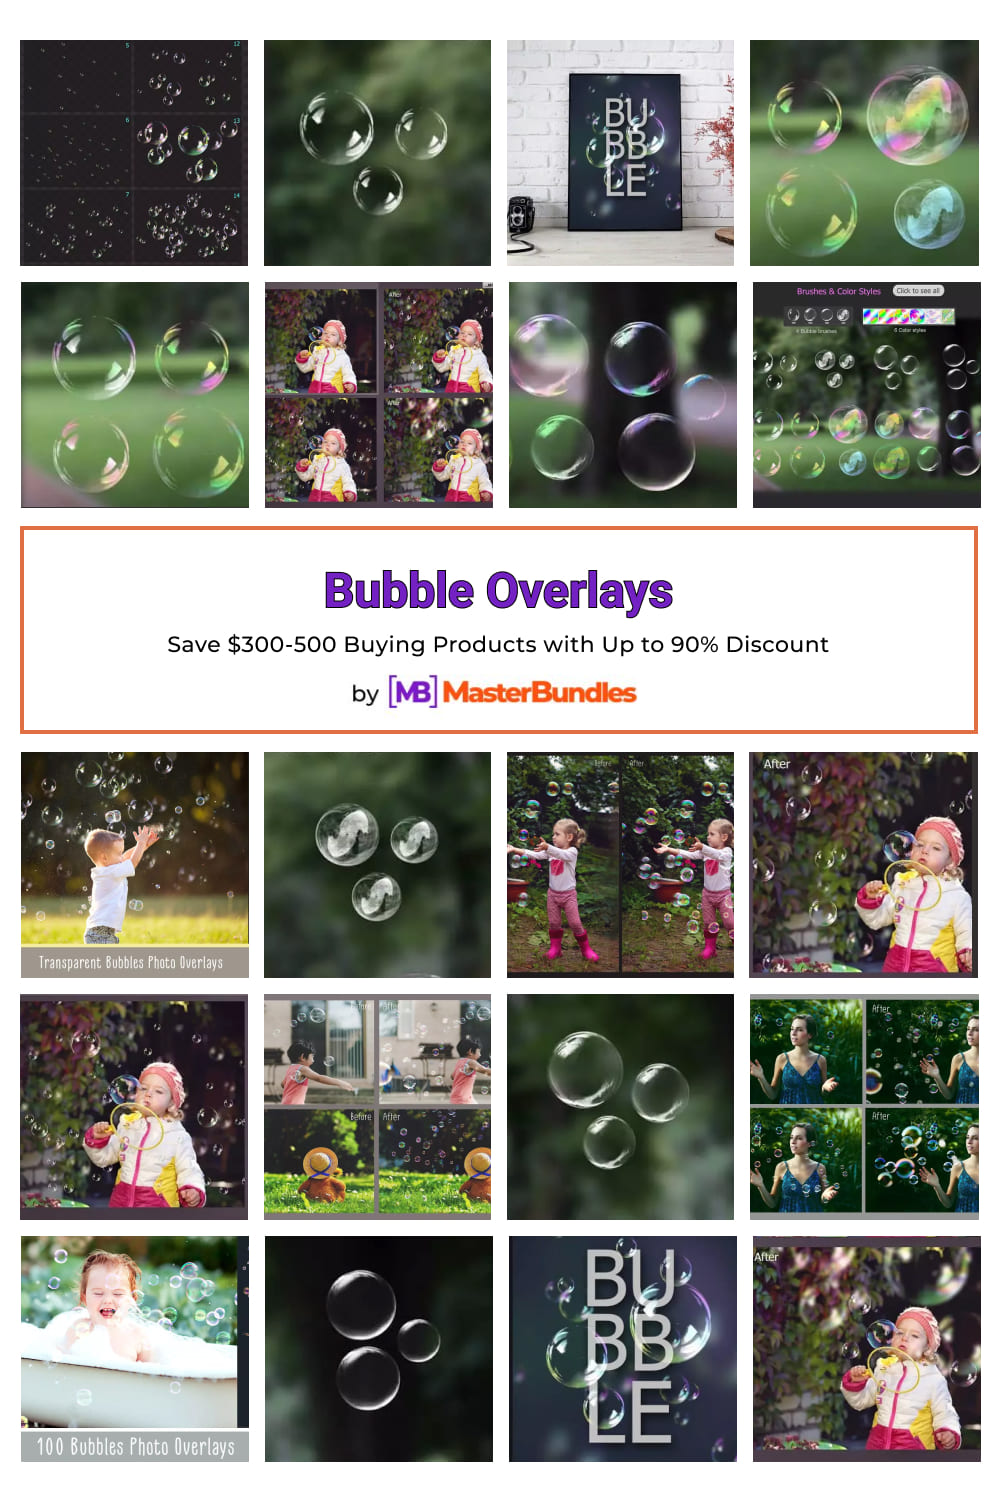 Bubble Overlays Pinterest image.